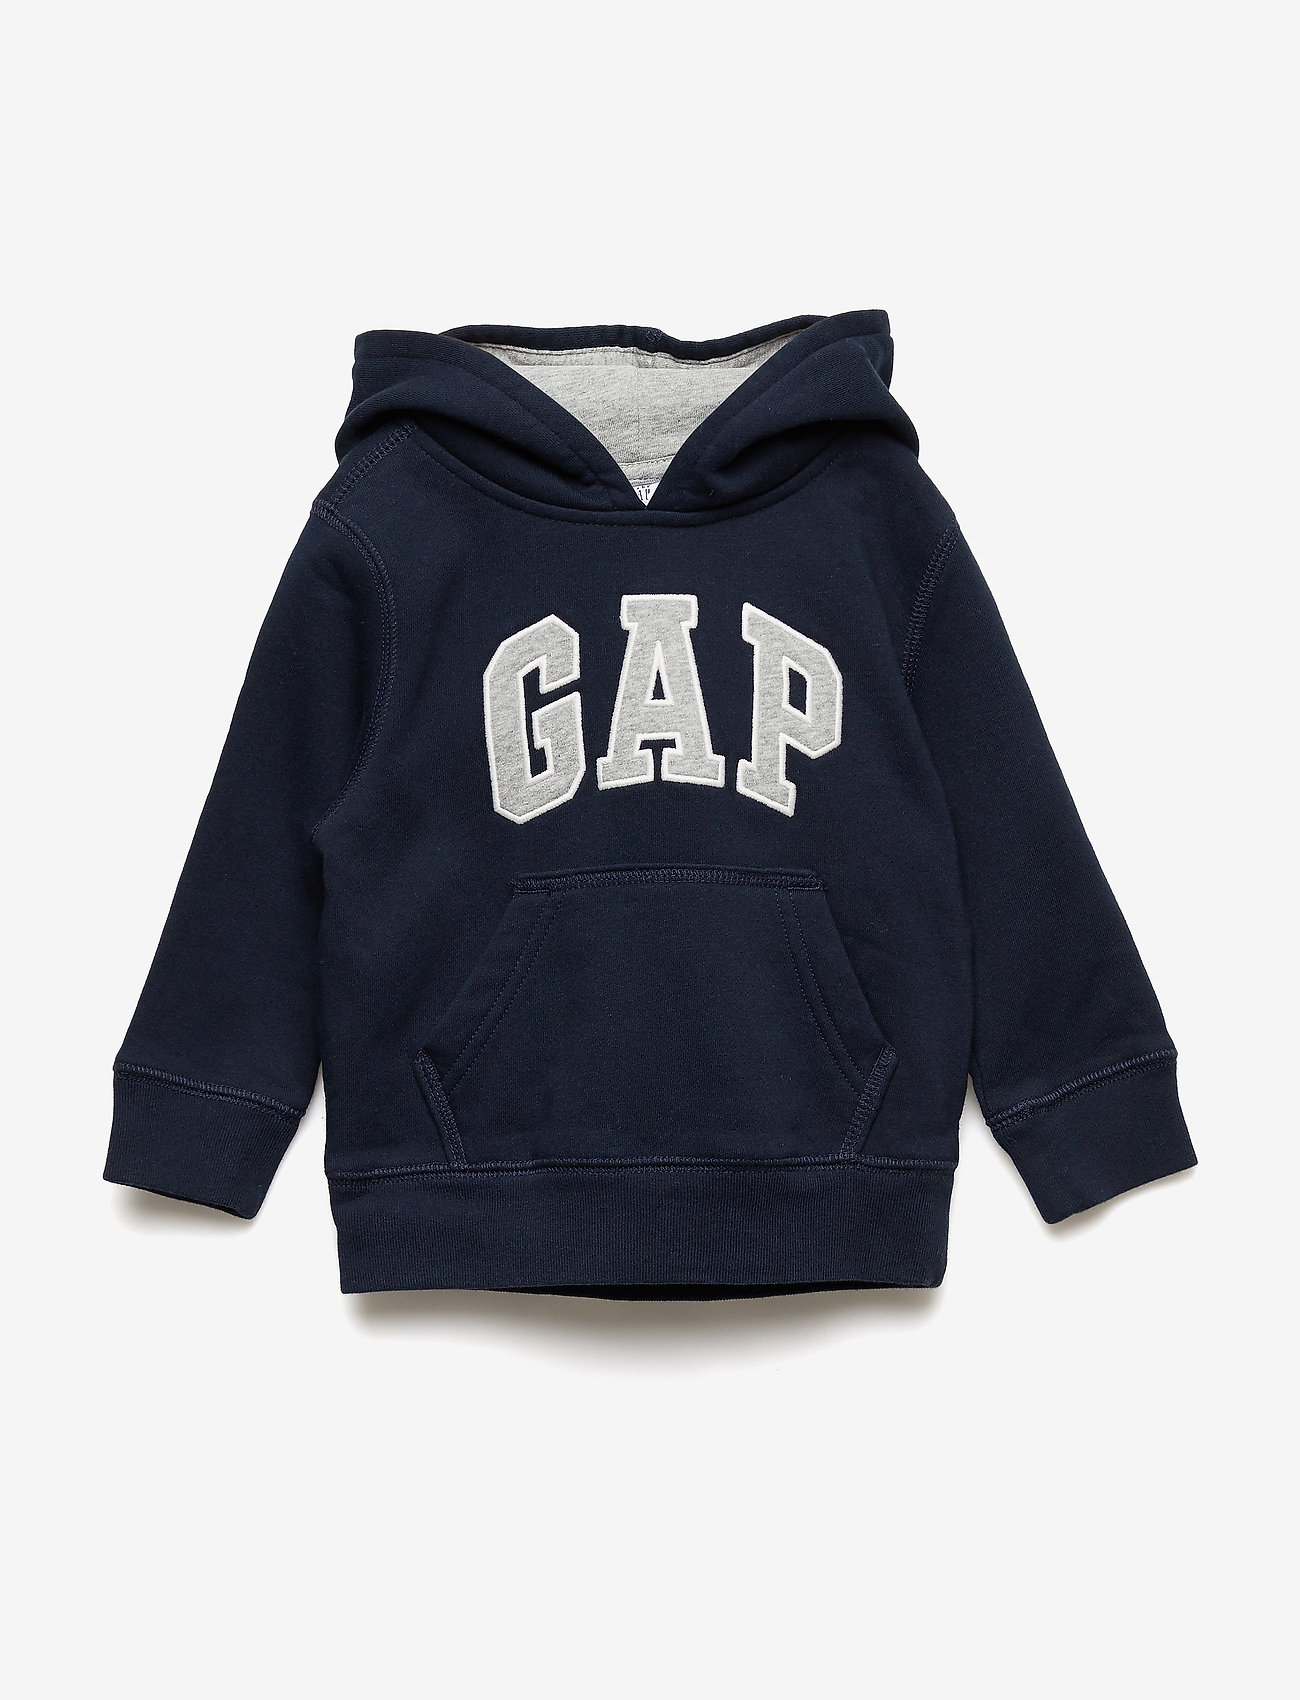 blue gap sweatshirt